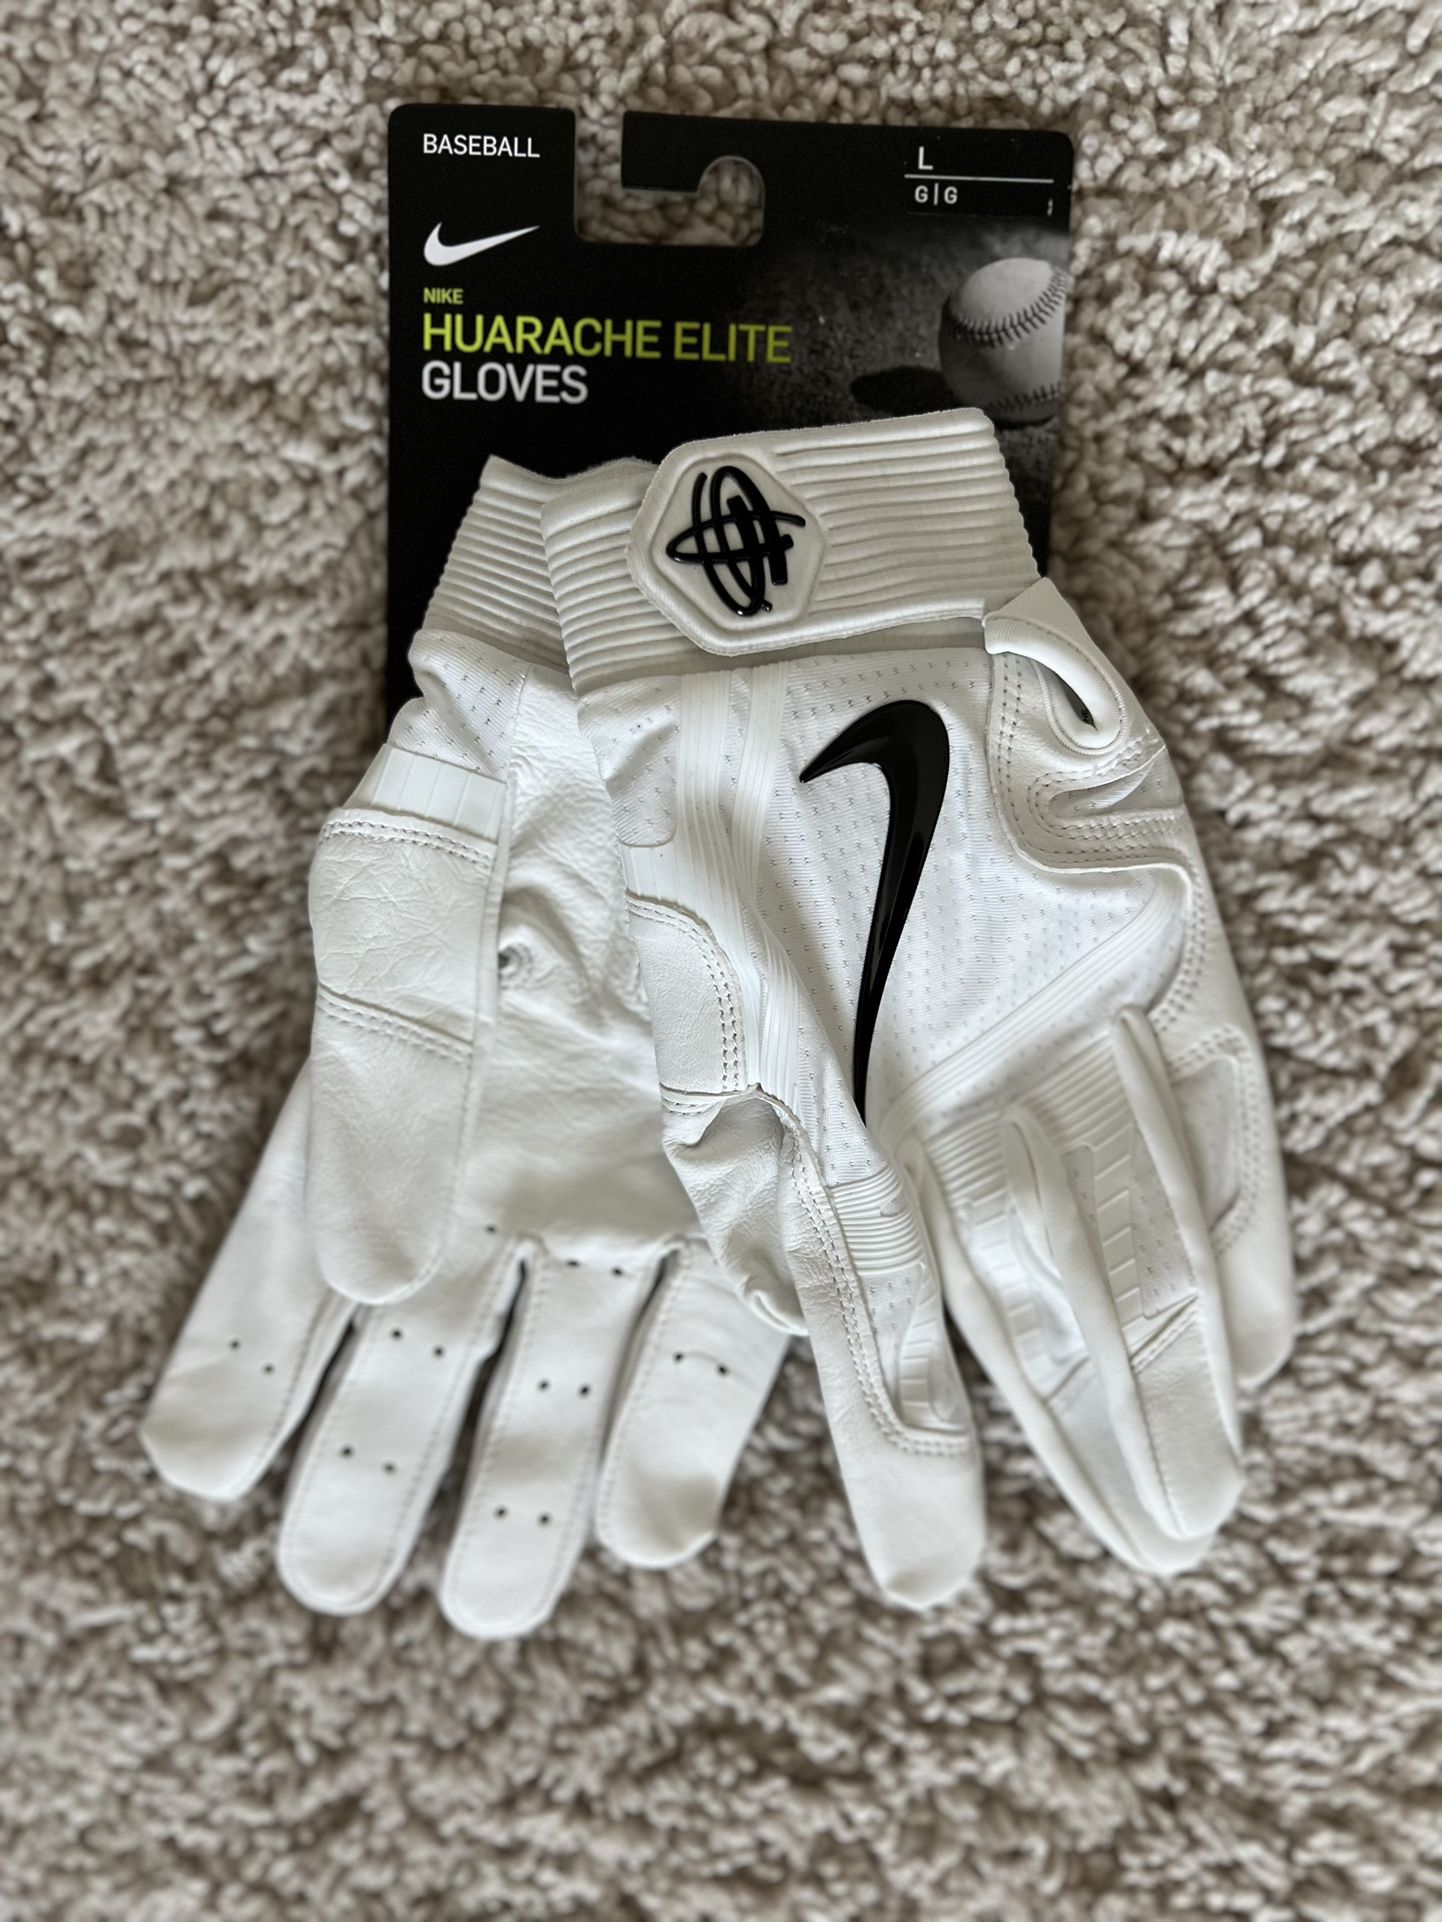 Nike Huarache Elite Baseball Batting Gloves White Black 